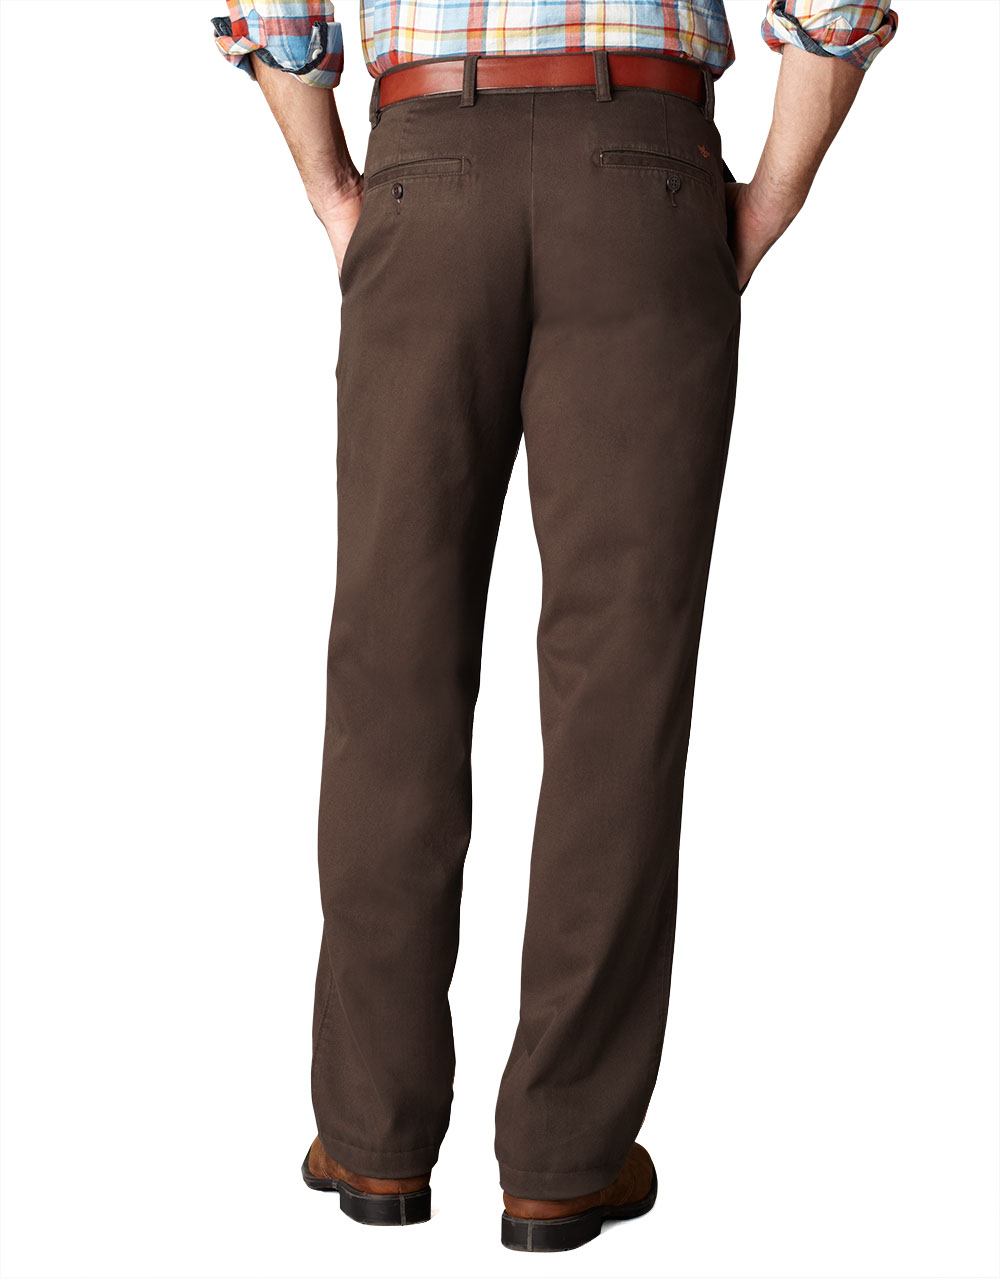 Lyst - Dockers Classic Fit Khaki Pants in Brown for Men